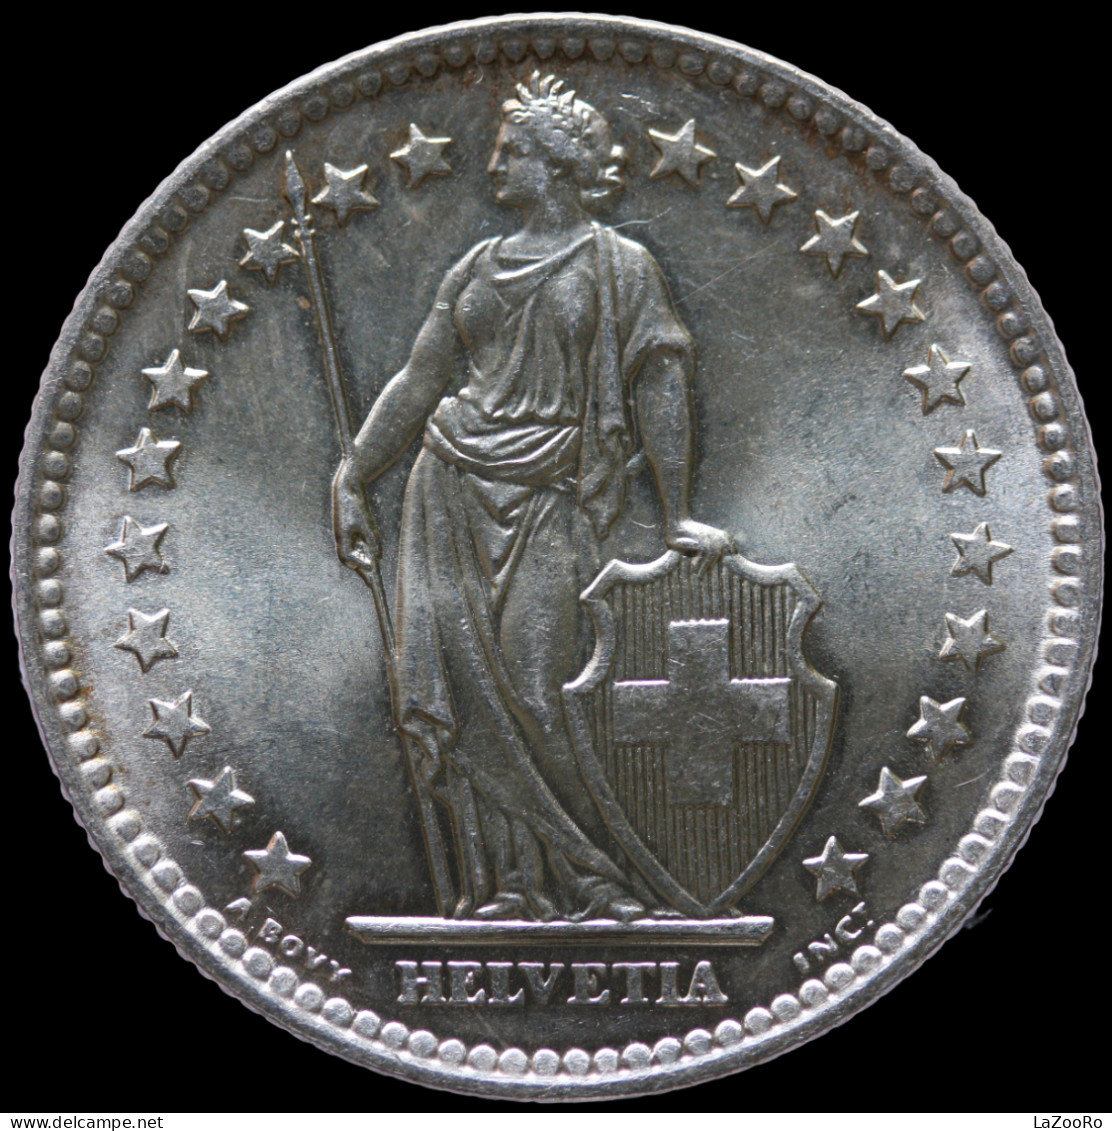 LaZooRo: Switzerland 2 Francs 1961 UNC - Silver - 2 Francs